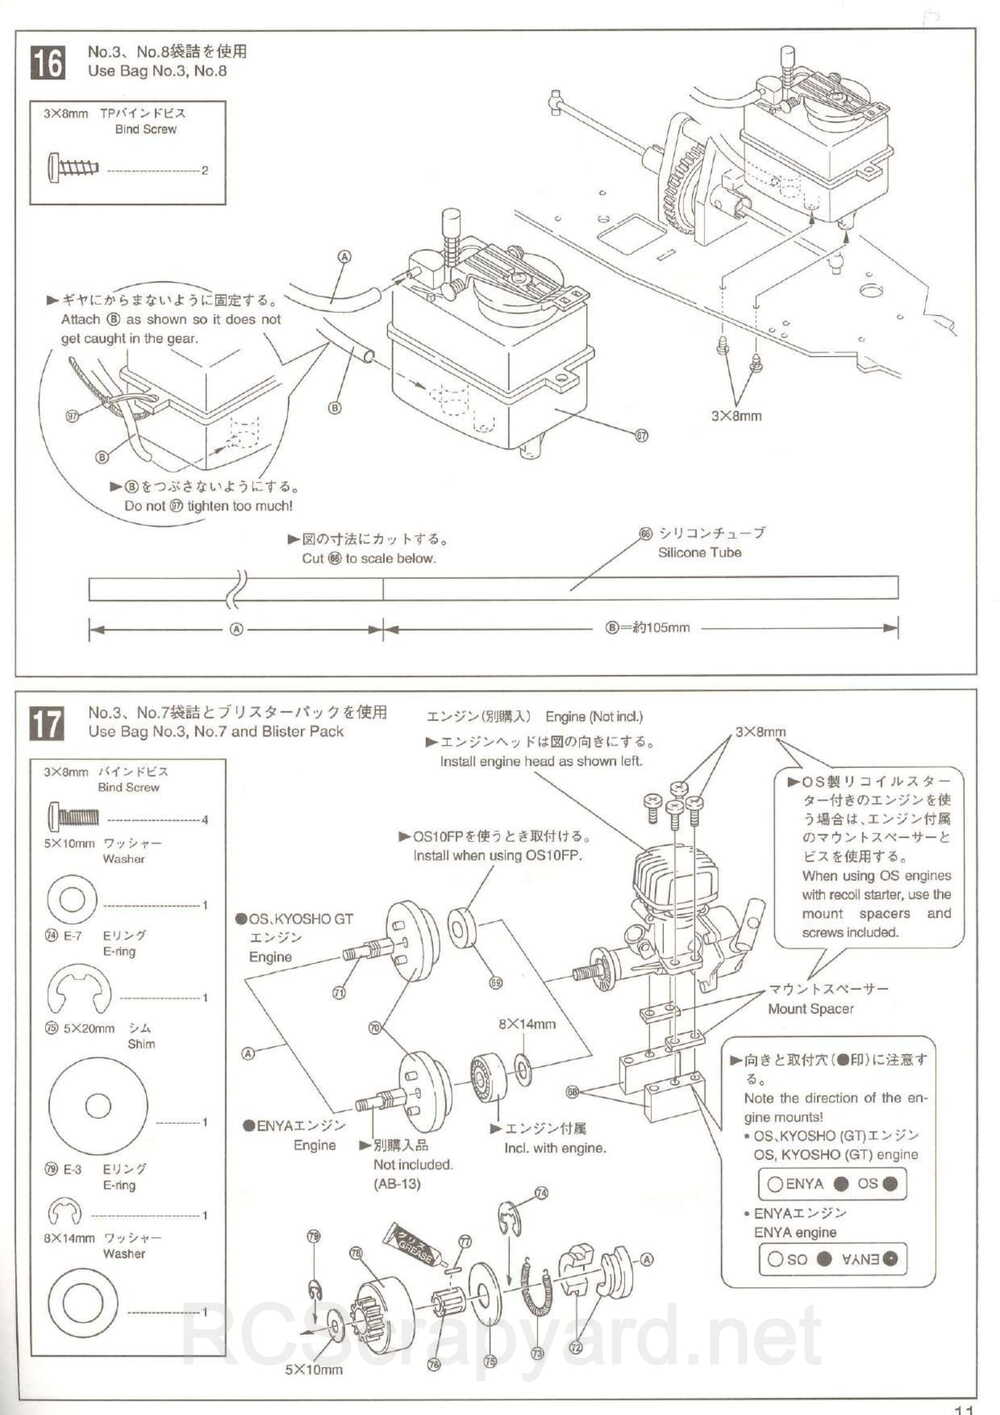 Kyosho - 31345 - Inferno 10 - Manual - Page 11